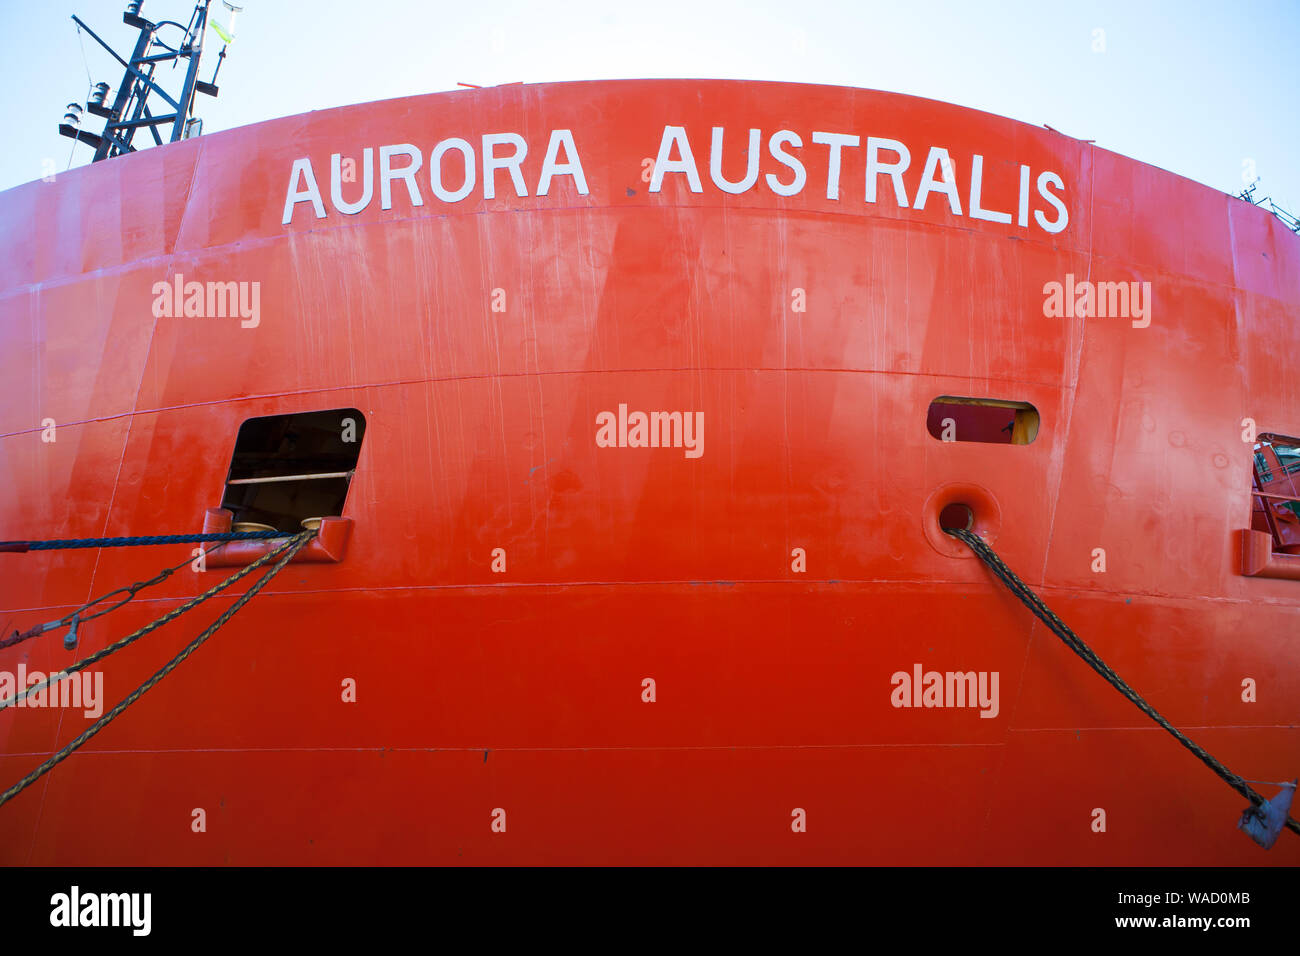 Aurora Australis Vessel Stock Photo